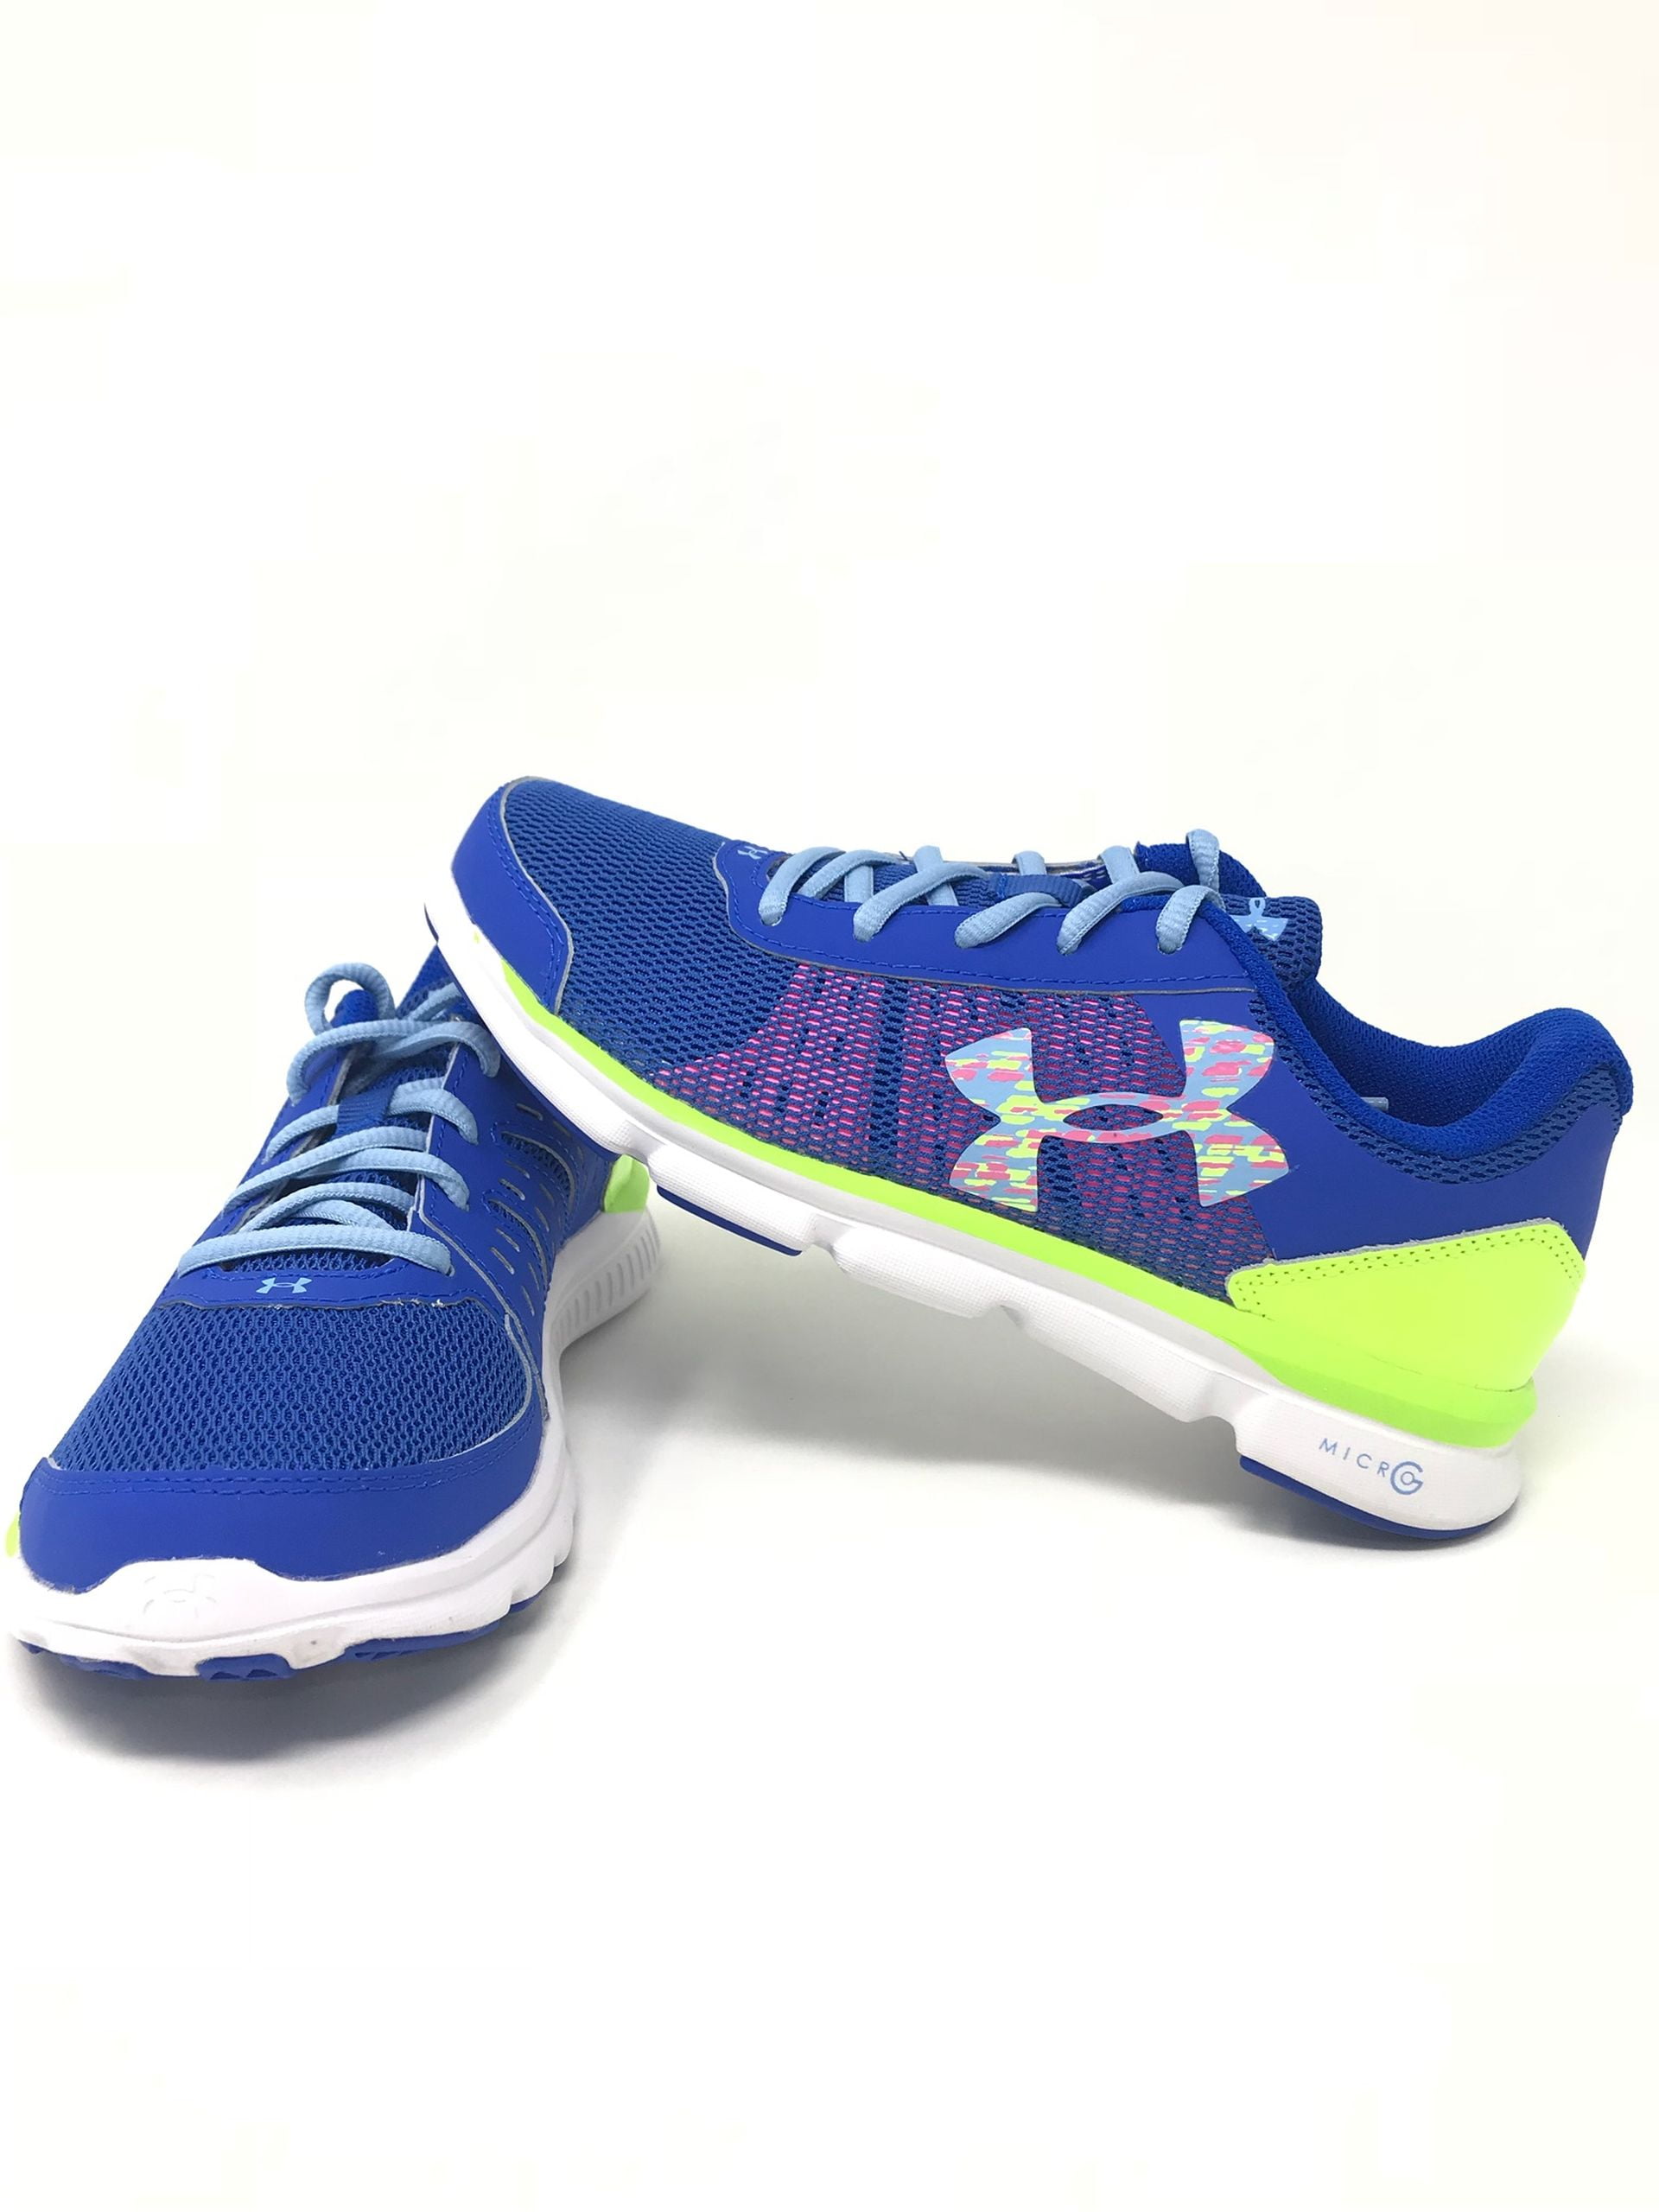 Under Armour Girls MicroG® Speed Swift Running Shoes UK13.5 Blk/aqu/pink 1266306 